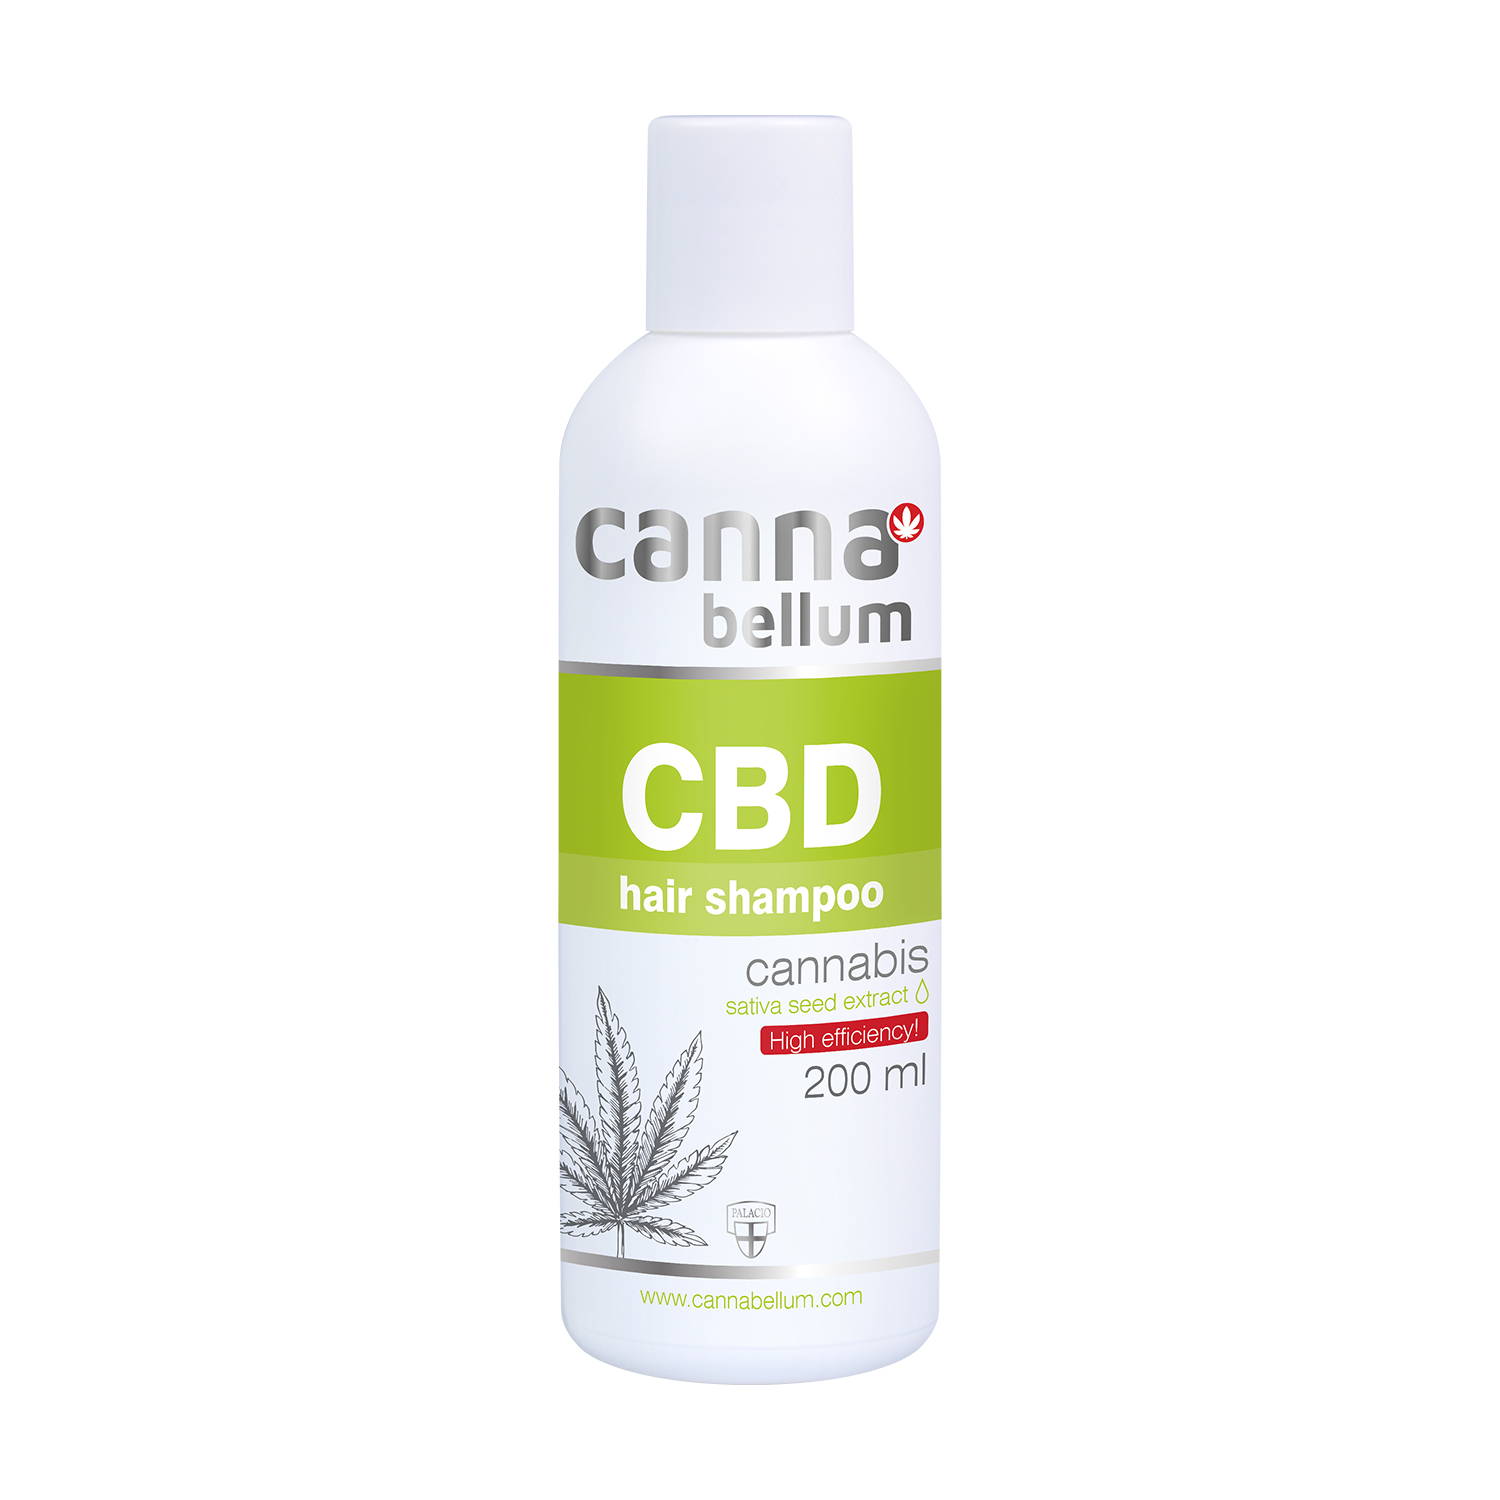 Cannabellum CBD hair shampoo 200ml P1251 WEB 47